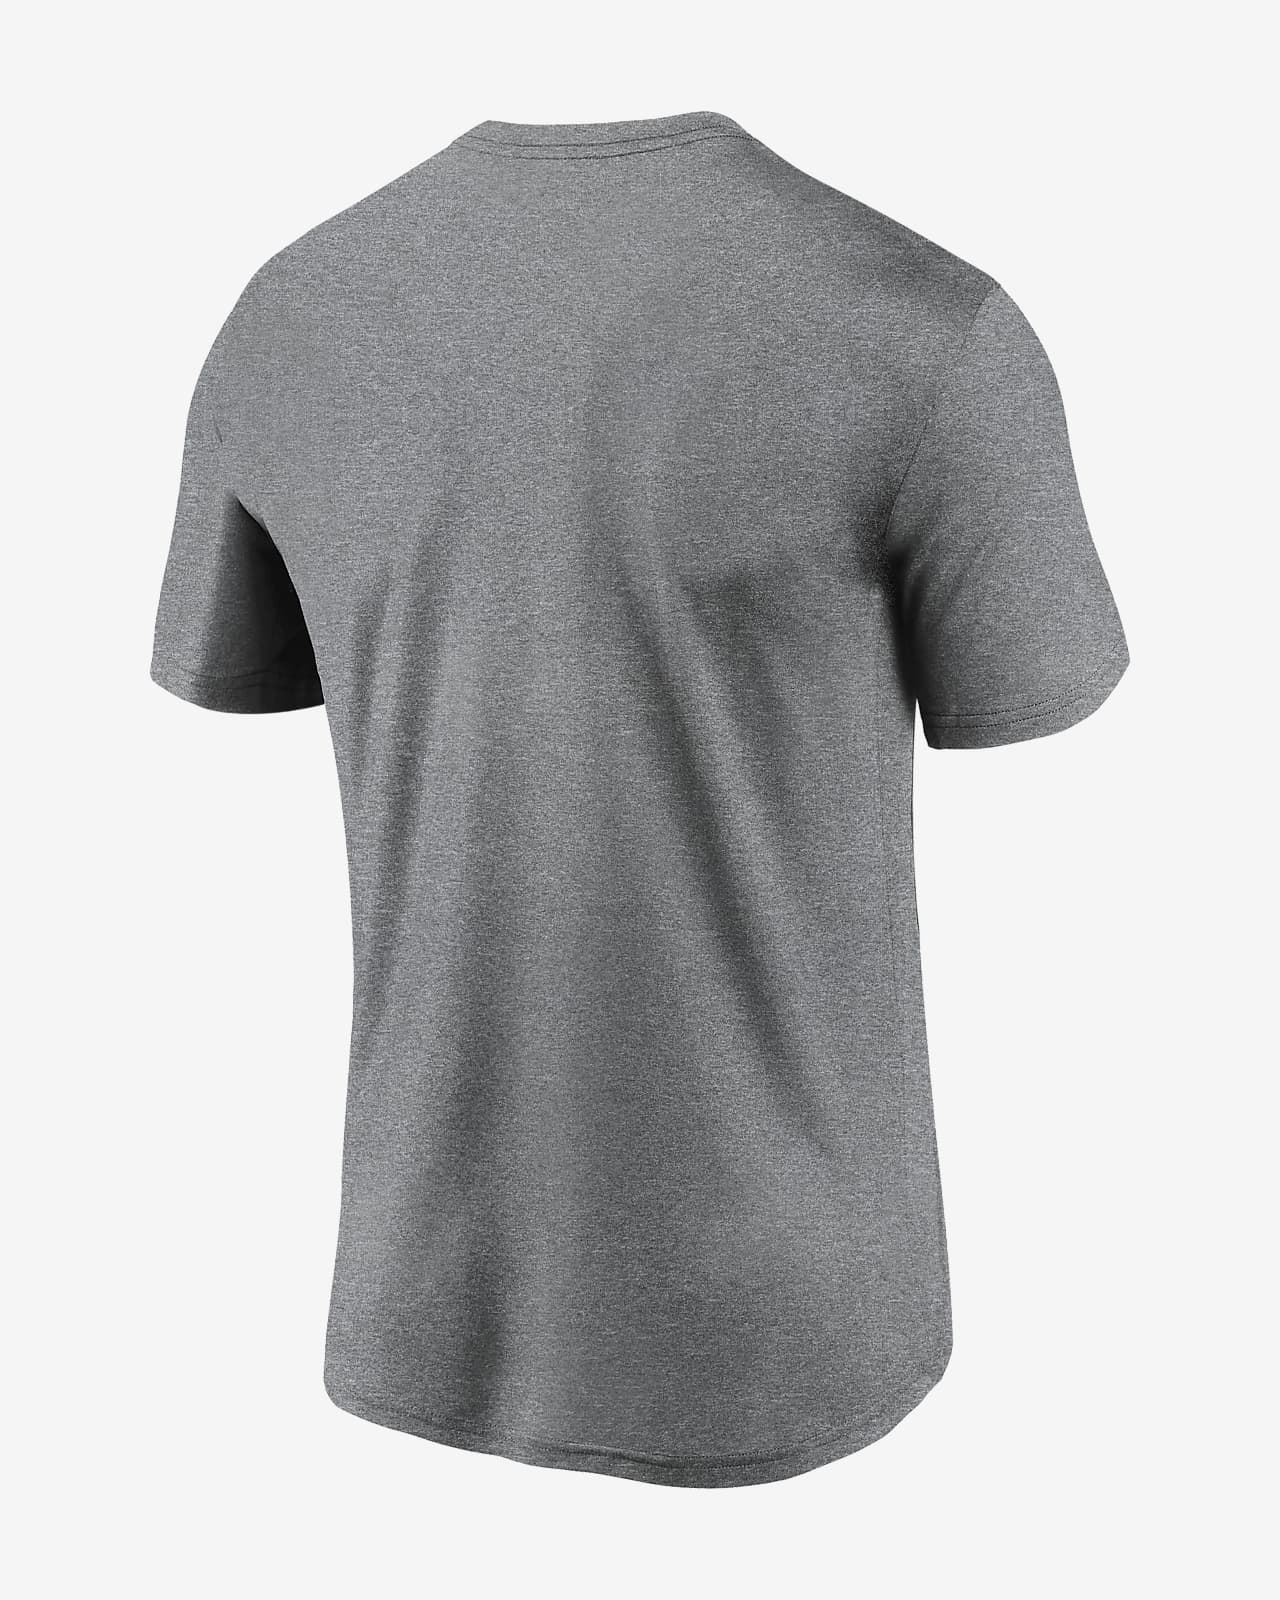 Nike Dri-FIT Wordmark Outline Legend (MLB Atlanta Braves) Men's T-Shirt ...